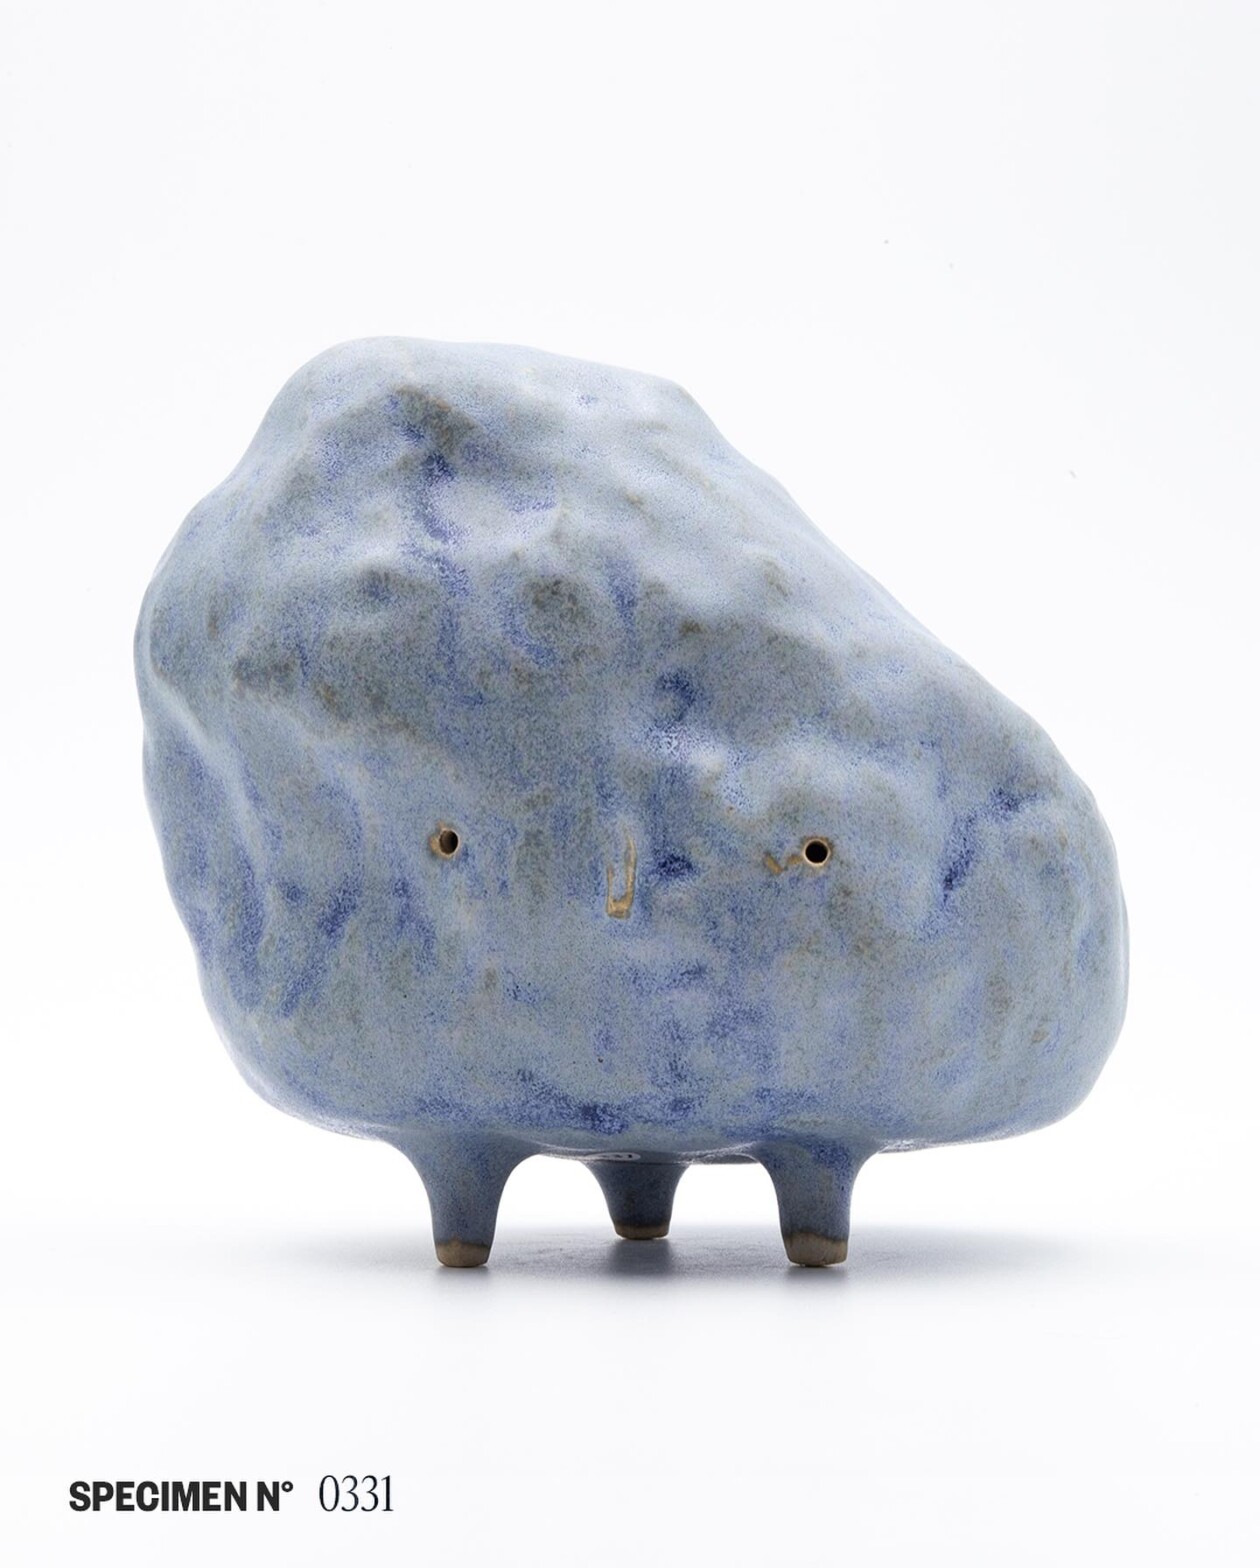 The Peculiar Blobby Ceramic Creatures Of Monsieur Cailloux (10)